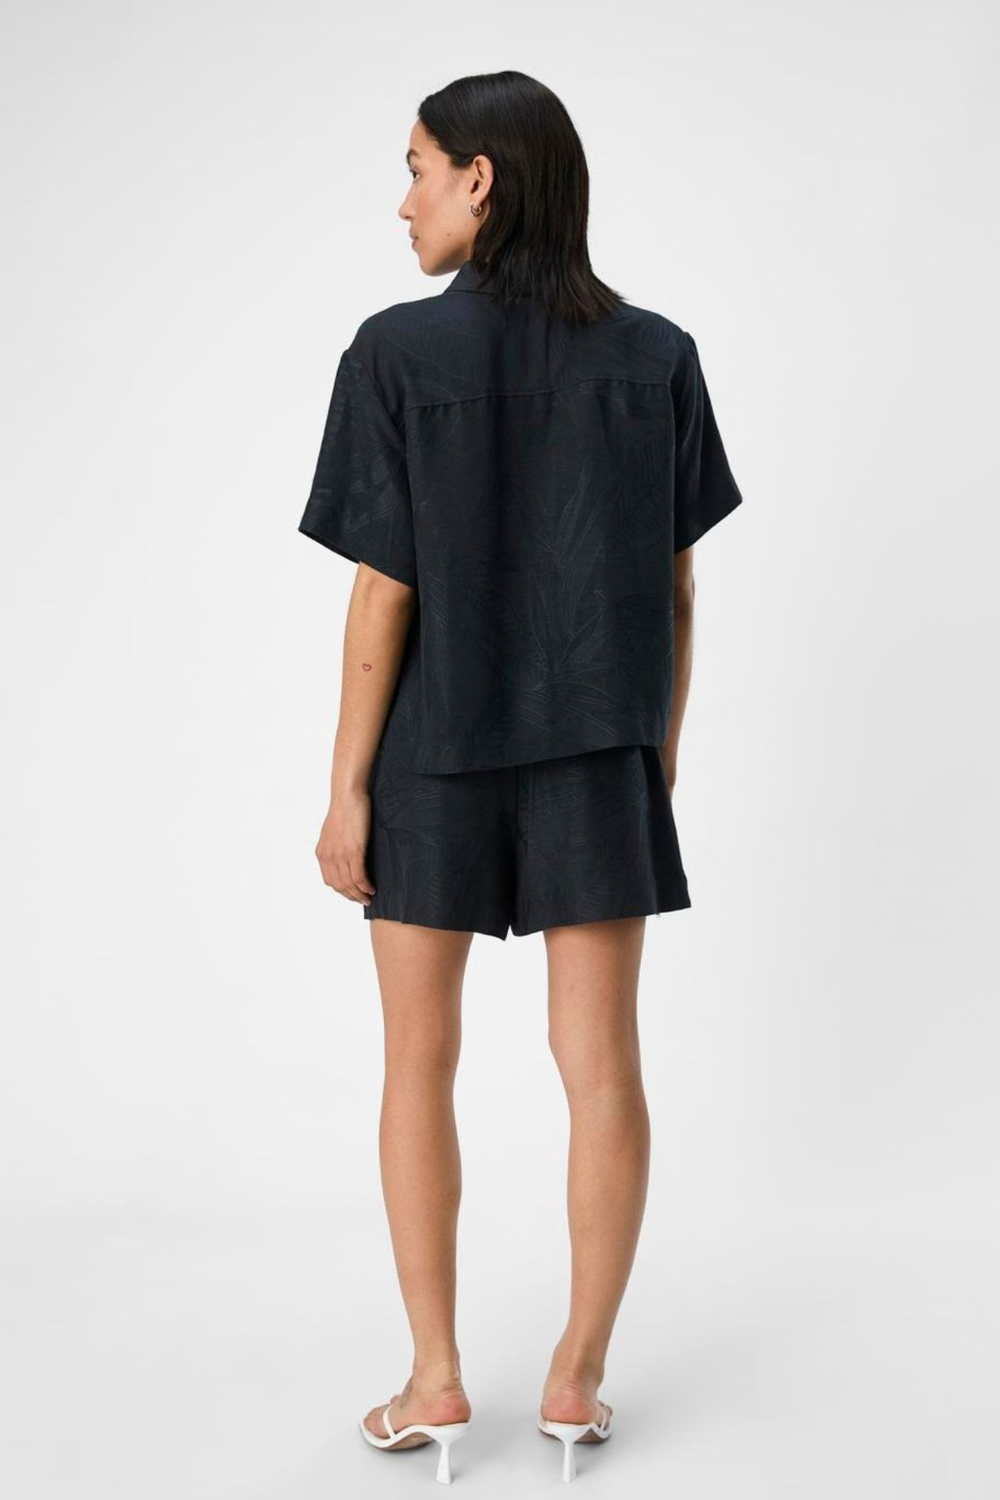 Objhannima S/S Shirt 132 - Black - Object